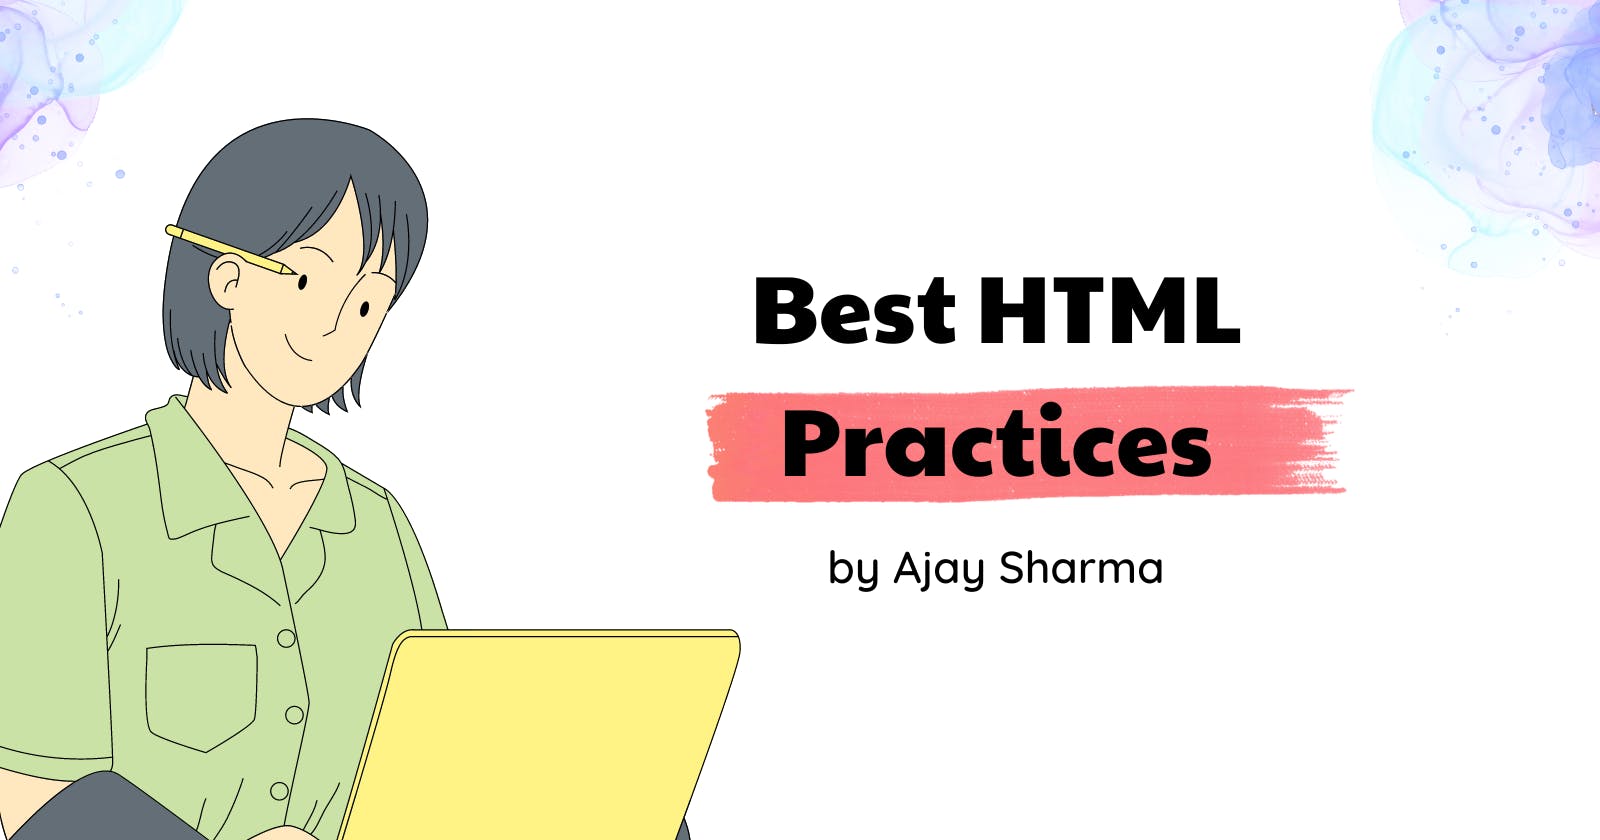 Best HTML Practices